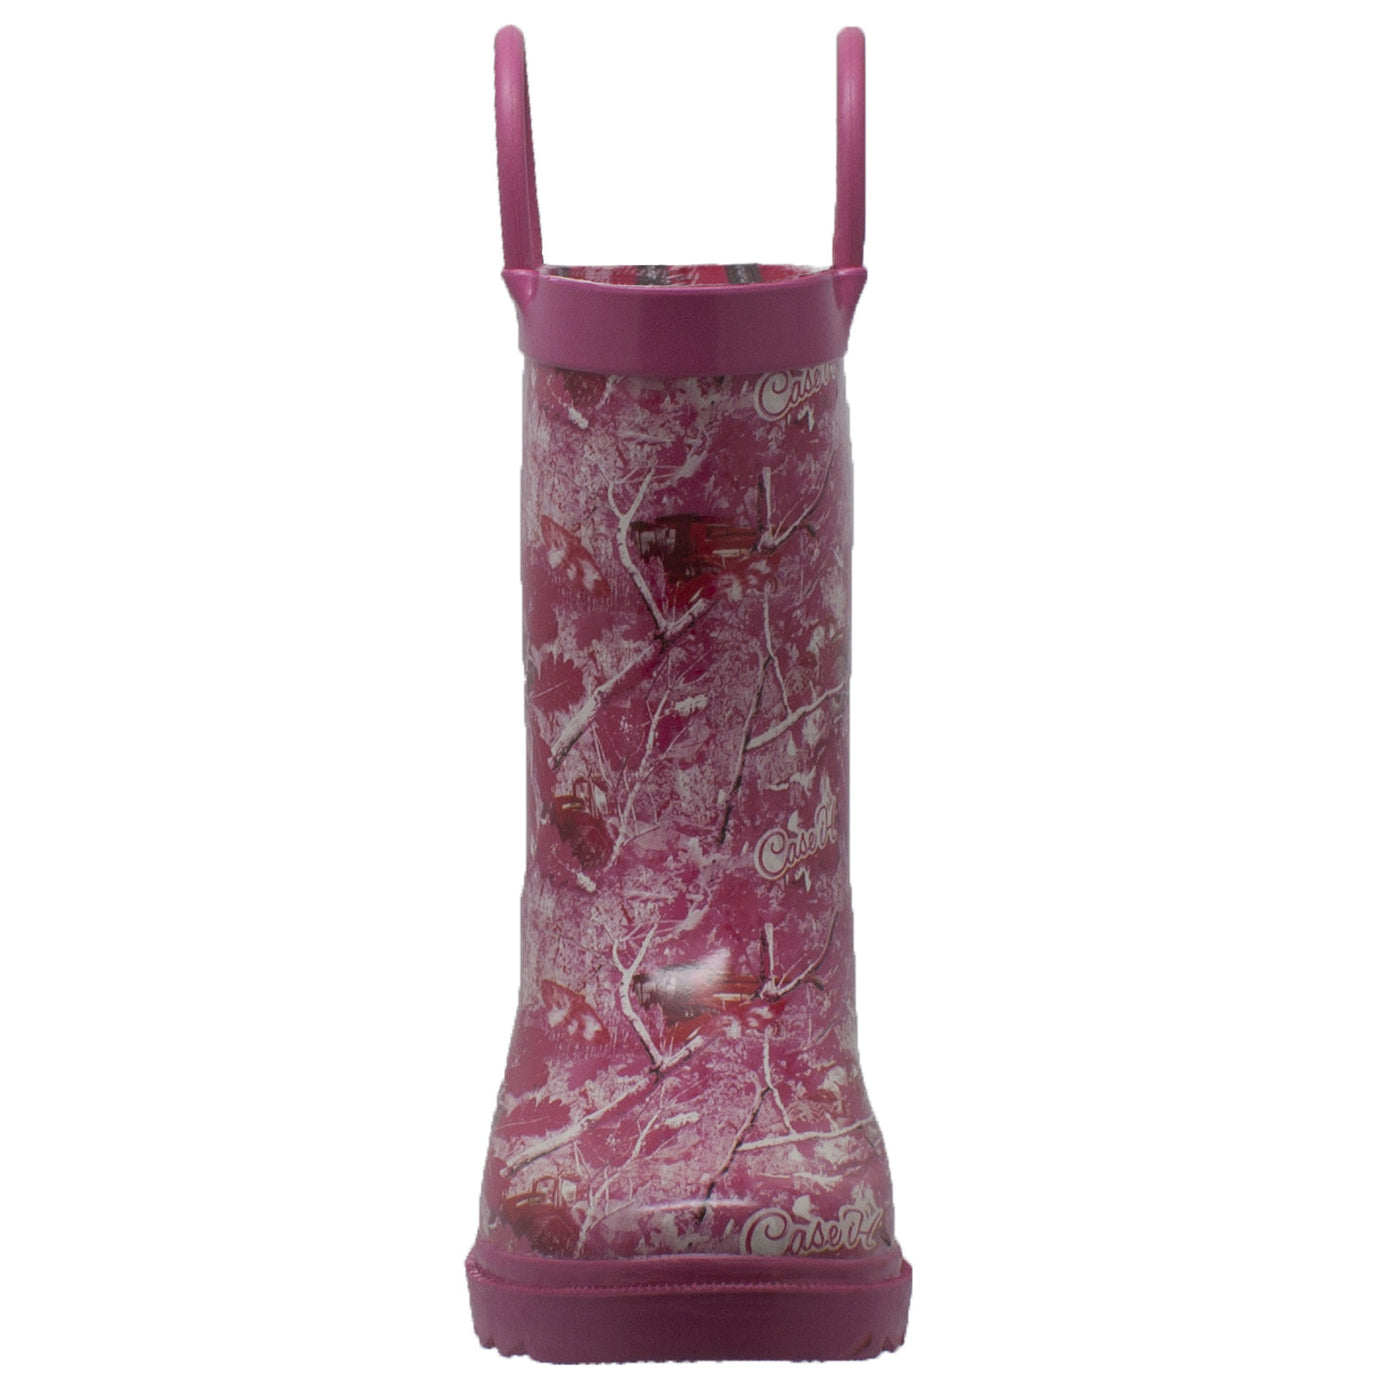 Toddler's Camo Rubber Boot Pink - CI-5006 - Shop Genuine Leather men & women's boots online | AdTecFootWear